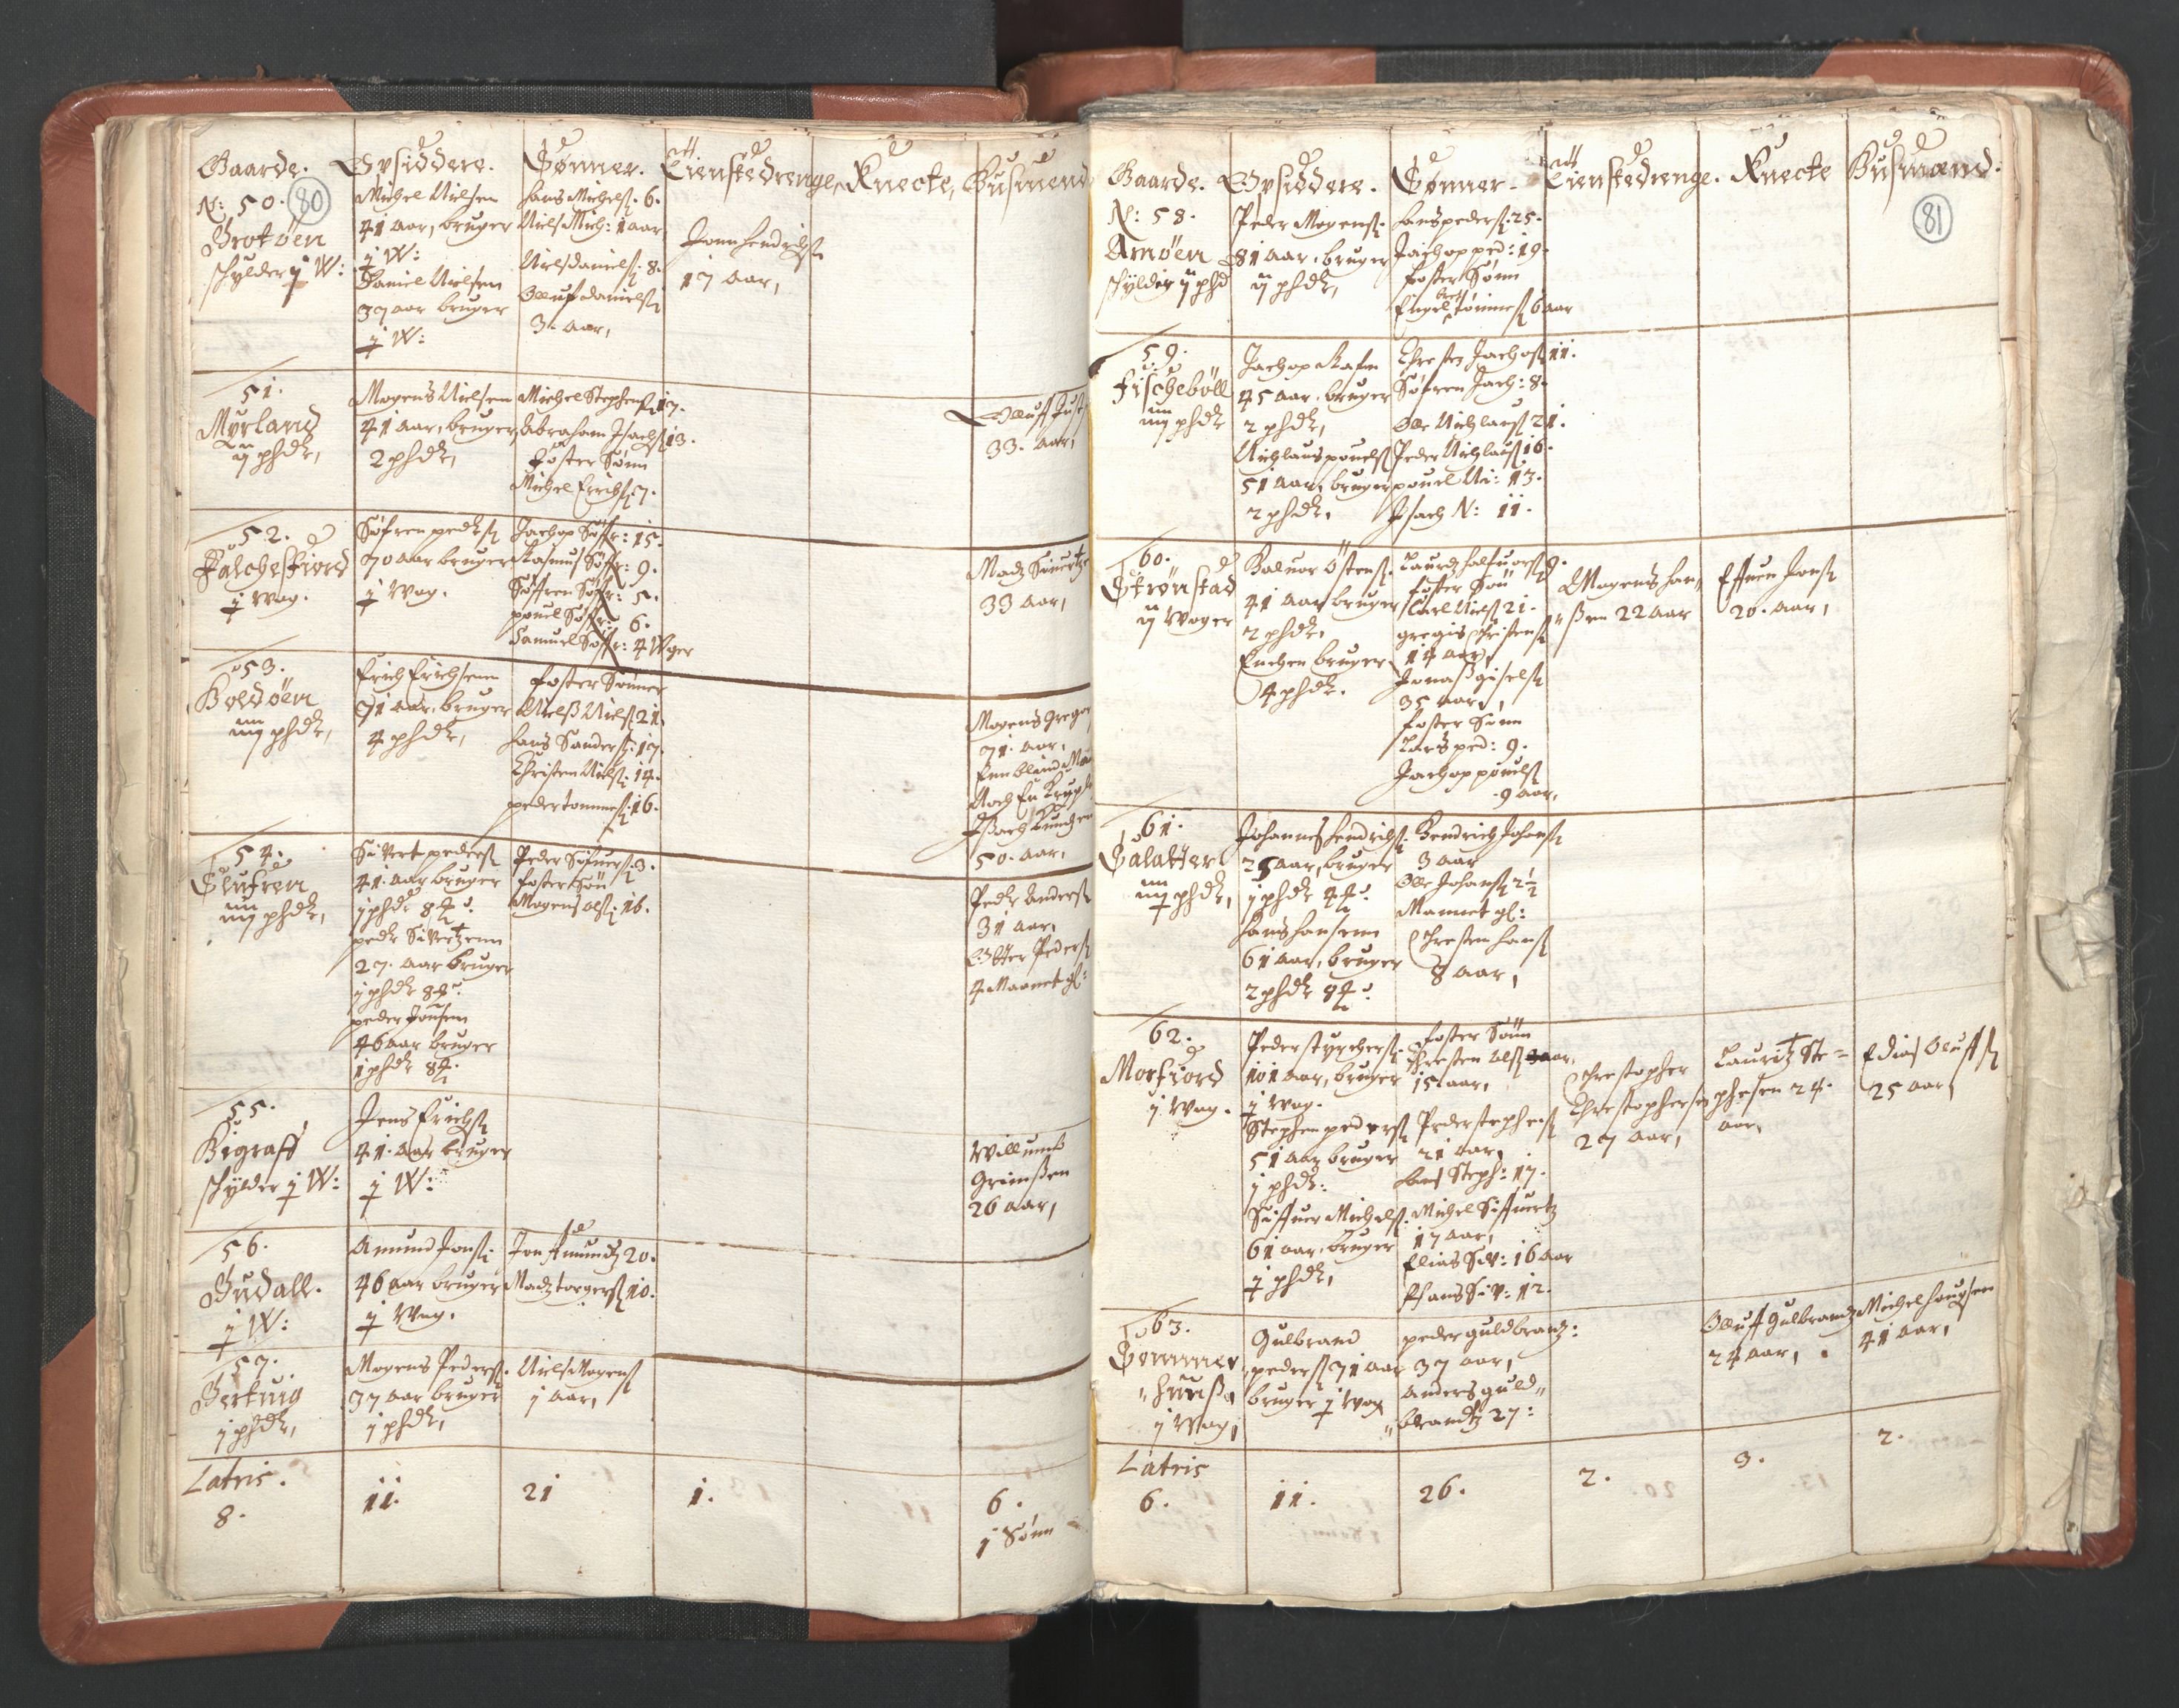 RA, Vicar's Census 1664-1666, no. 36: Lofoten and Vesterålen deanery, Senja deanery and Troms deanery, 1664-1666, p. 80-81